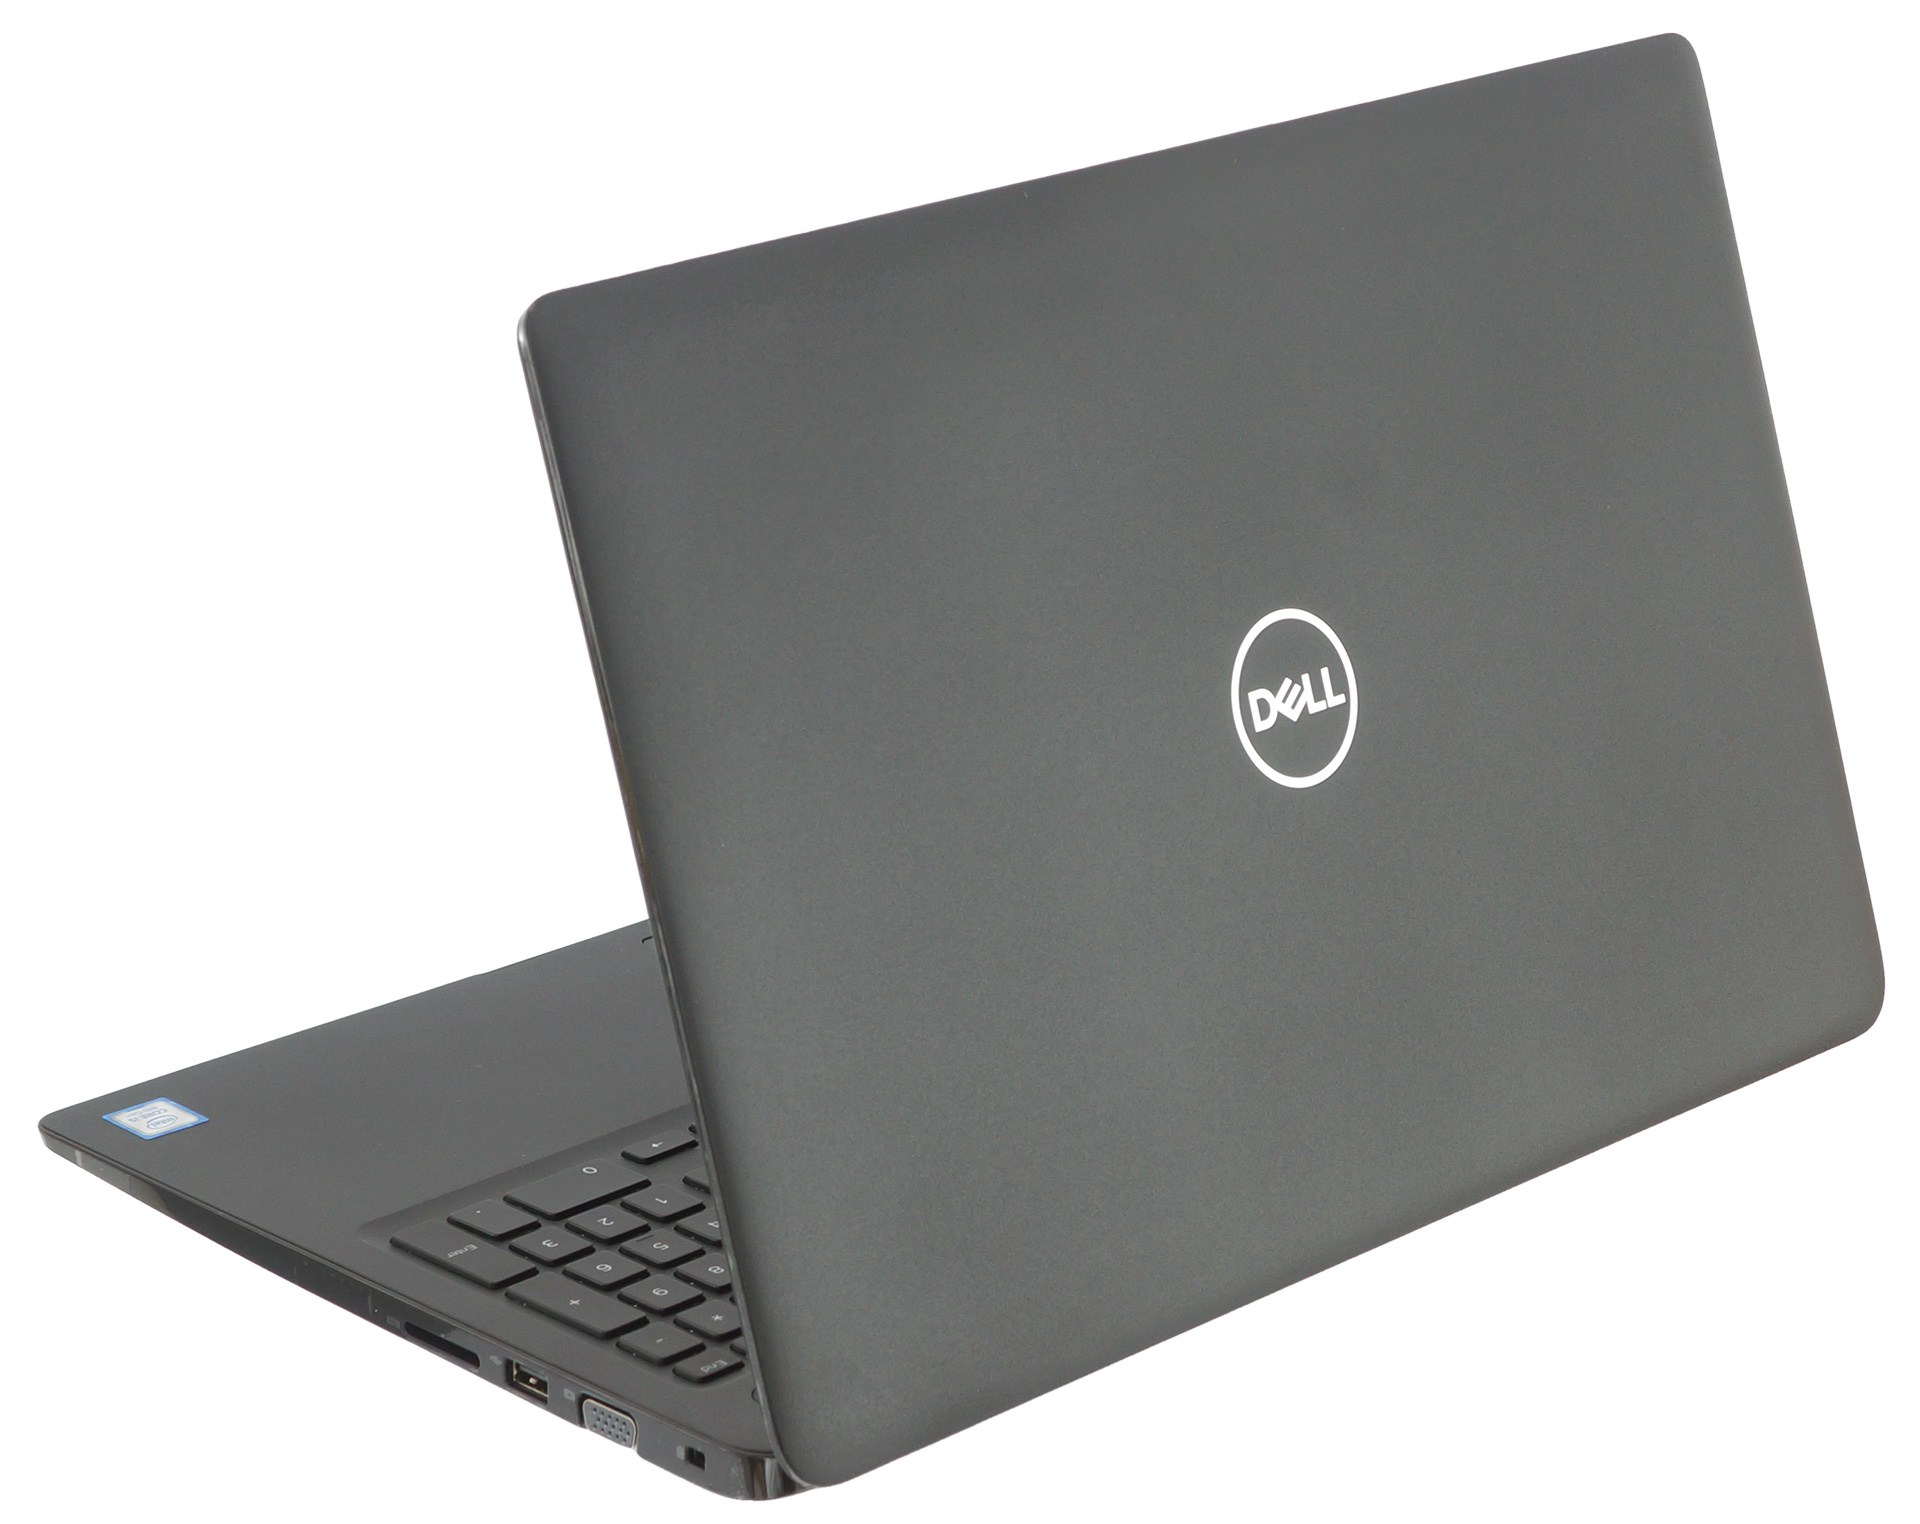 Laptop Dell Latitude 3500/ i7-8565U-1.8G/ 8G/ 128G SSD+1TB/ 15.6